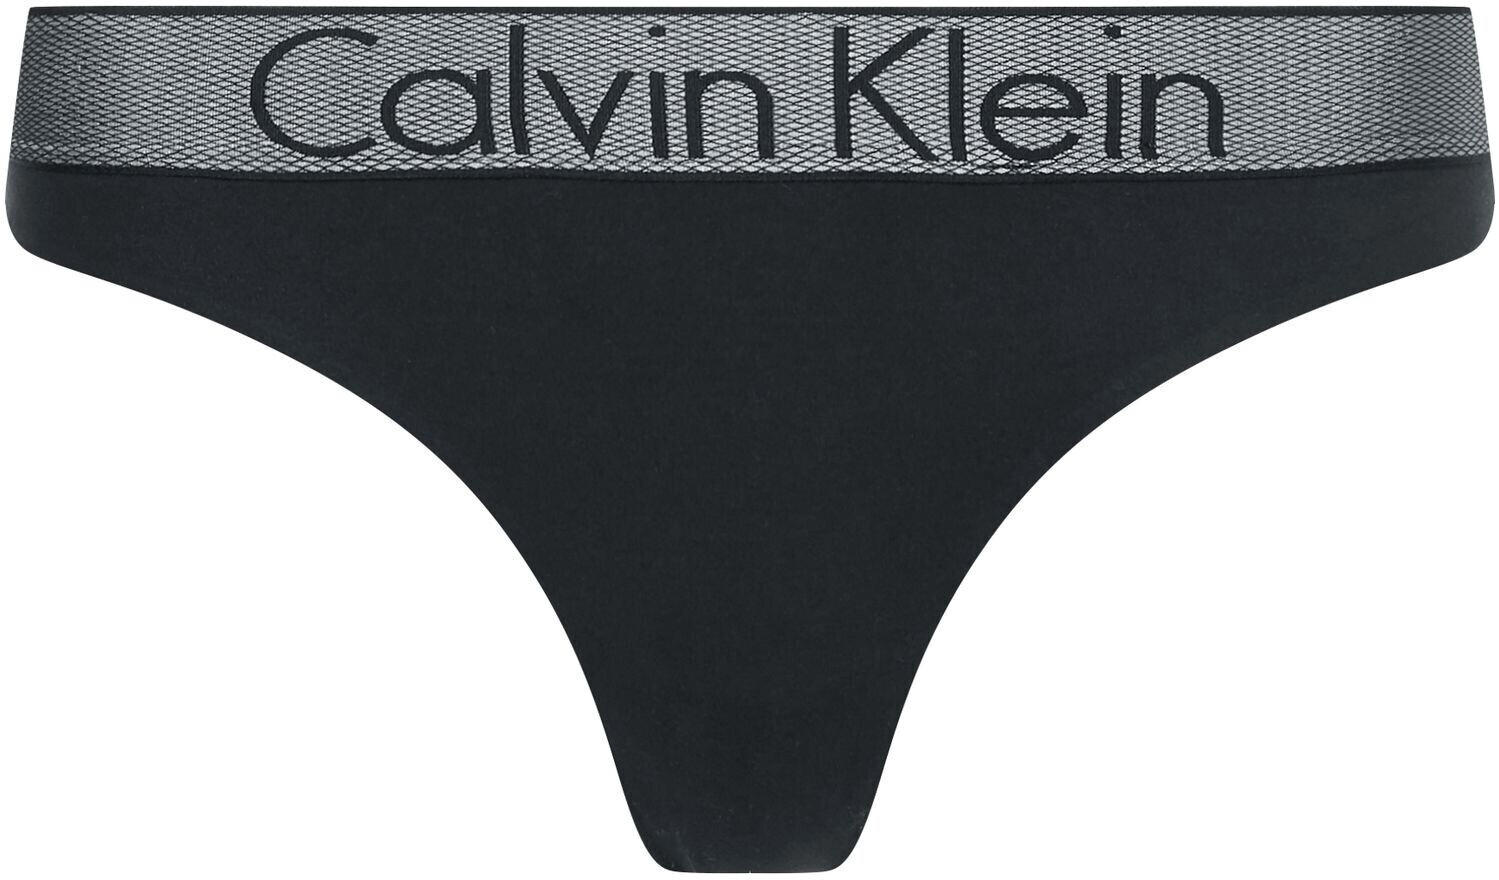 Calvin Klein Customized Stretch Thong black